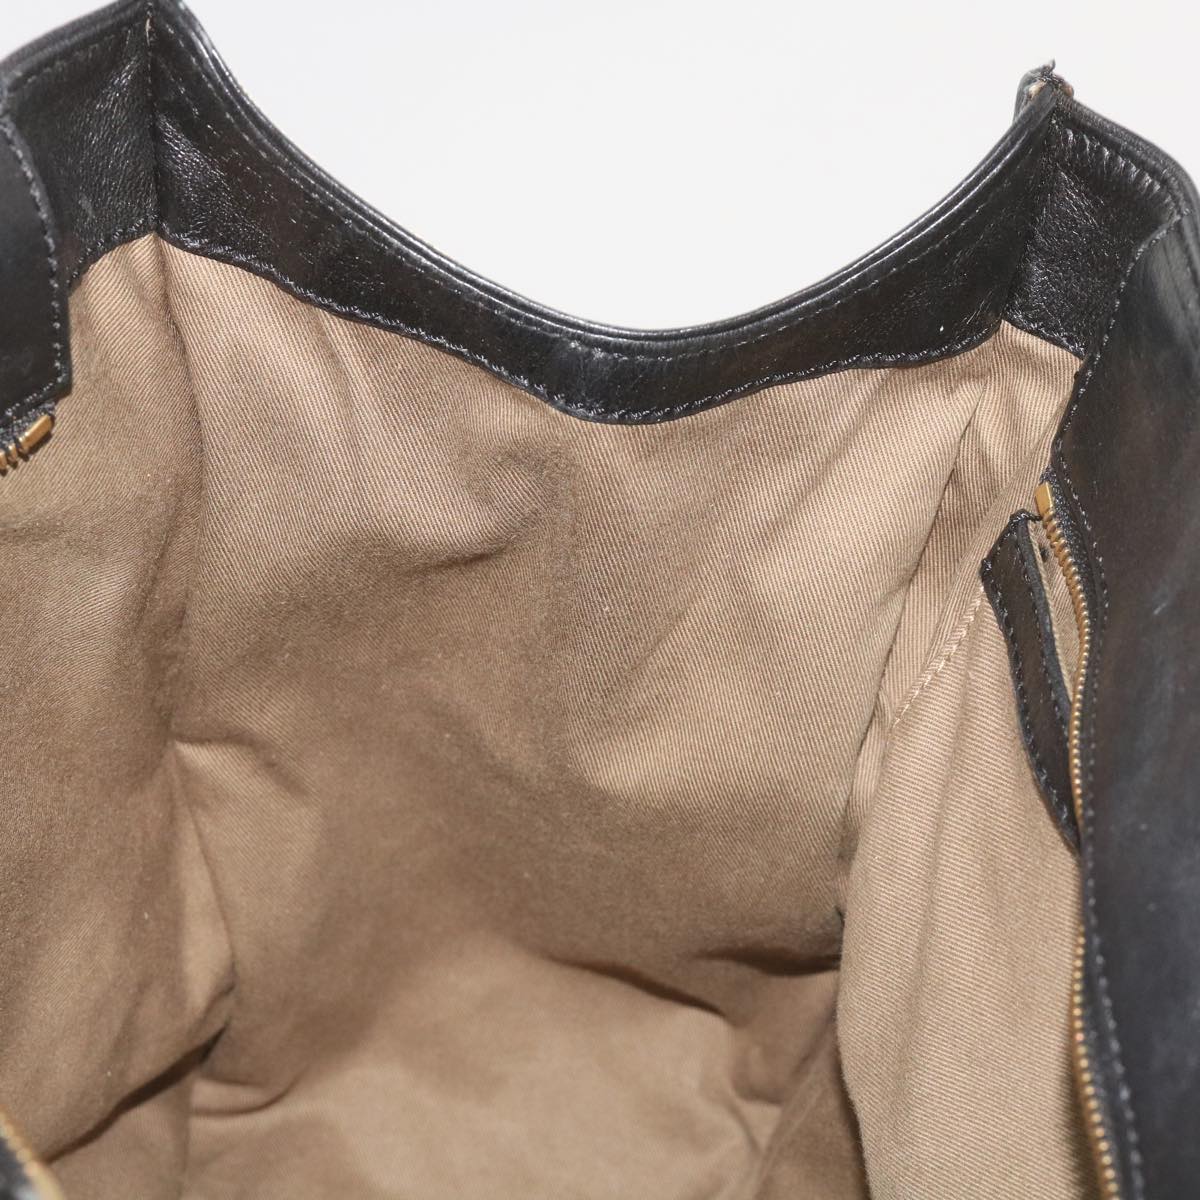 Chloe Harley Hand Bag Canvas Leather Beige 01 10 51 6008 Auth yk10852